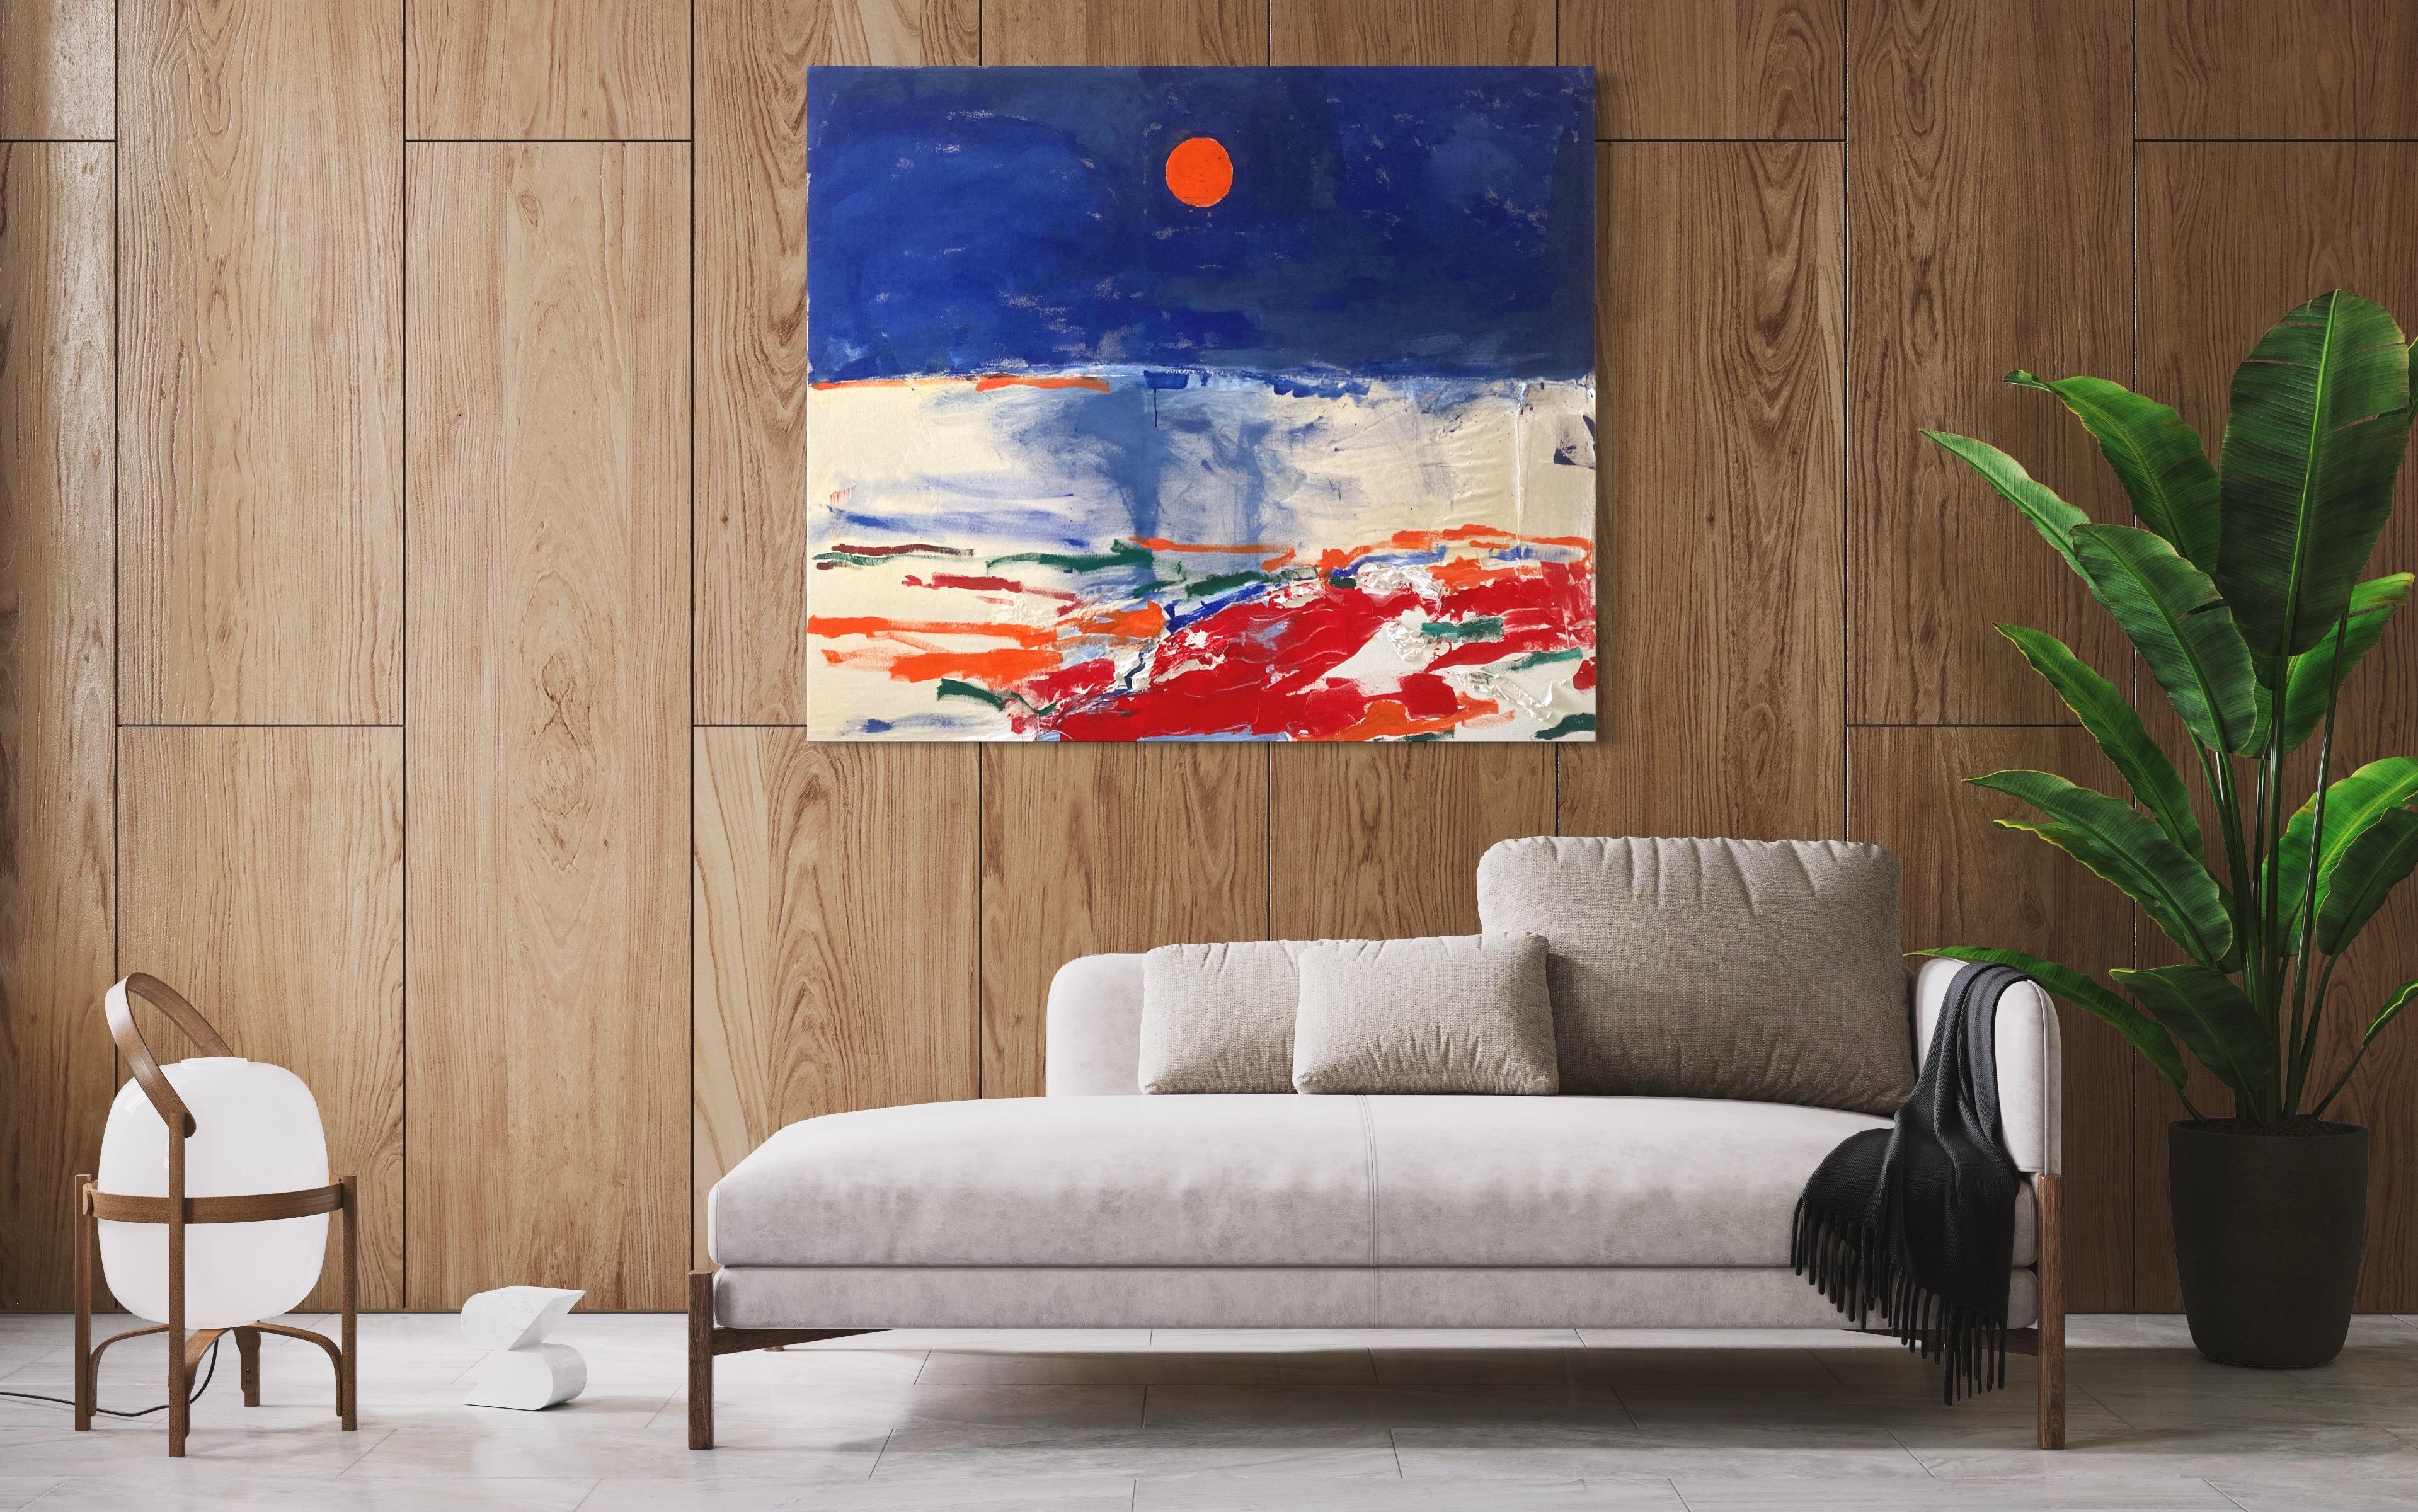 Burning Sun, Plastic Shoreline - Contemporary Mixed Media Landscape Painting For Sale 5